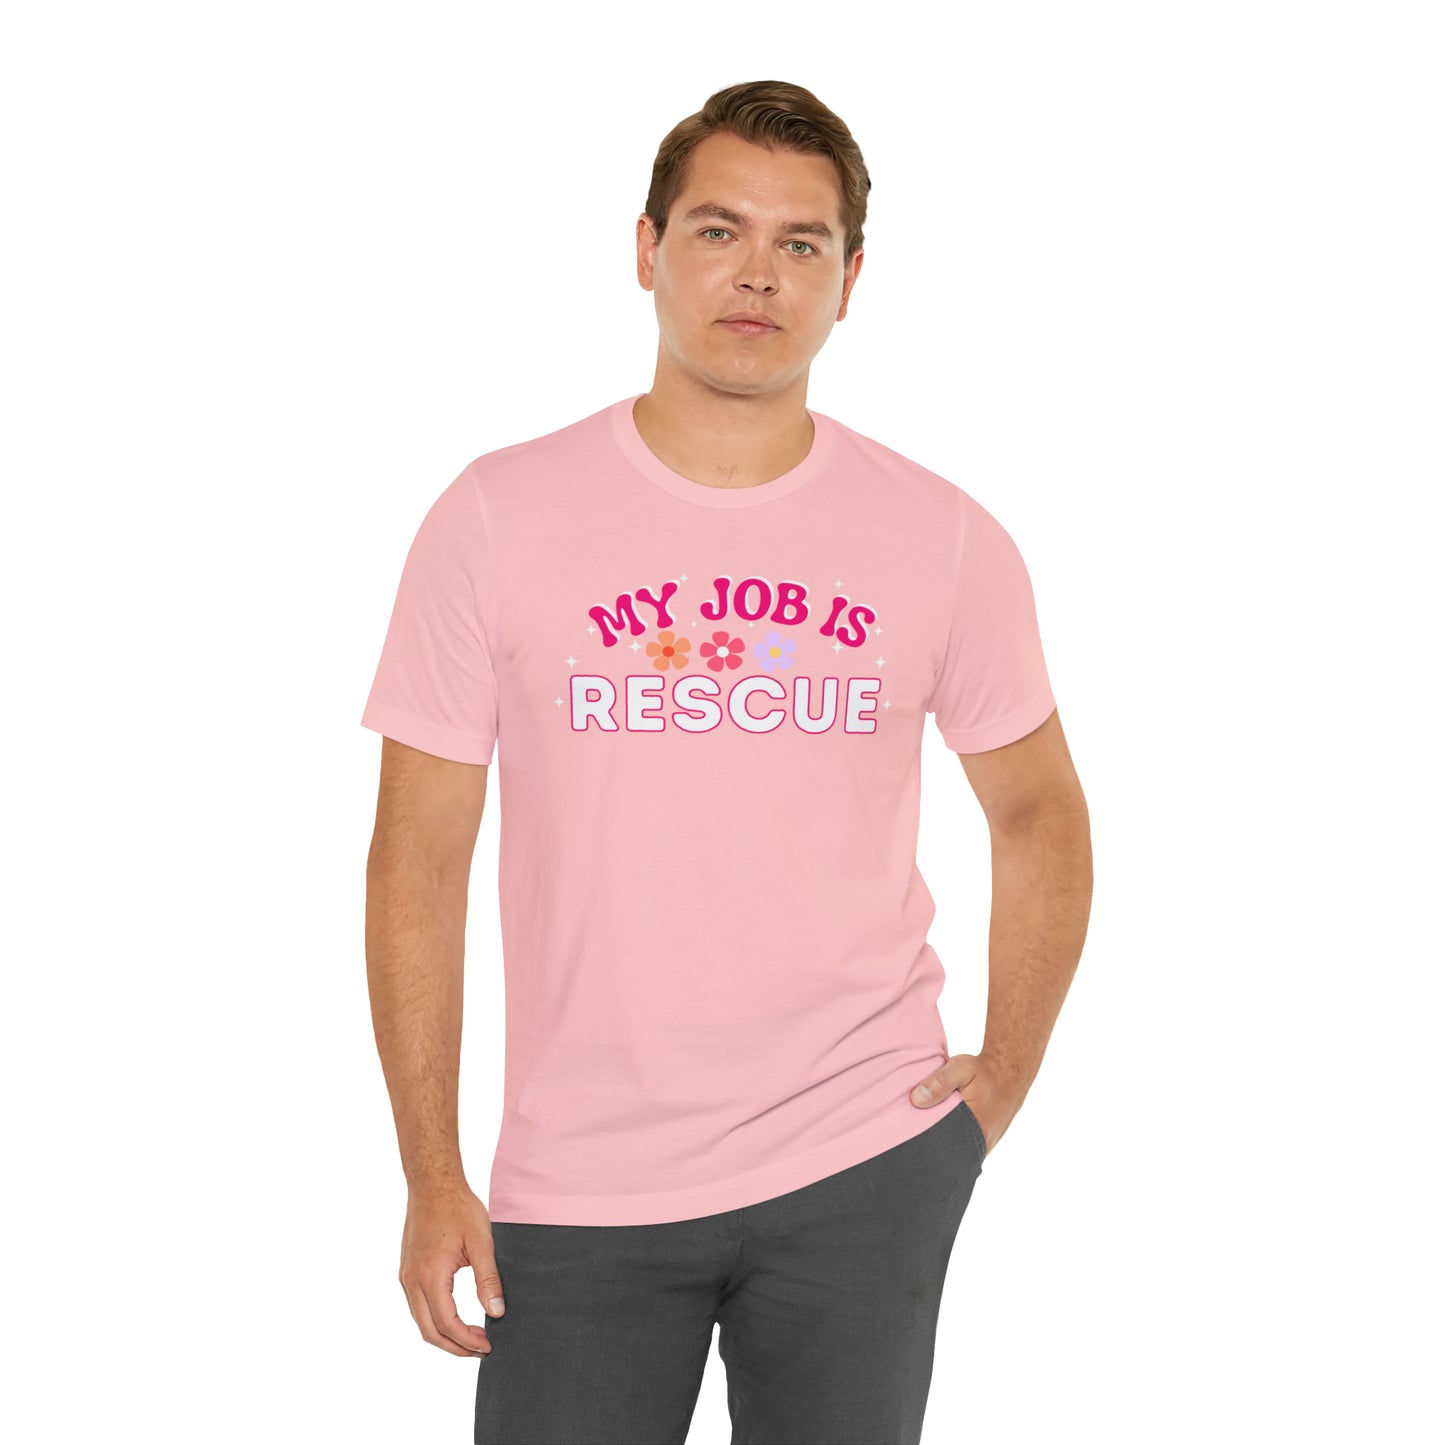 My Job is Rescue Shirt Firefighter Shirt Coast Guard Shirt Paramedic, Lifeguard,